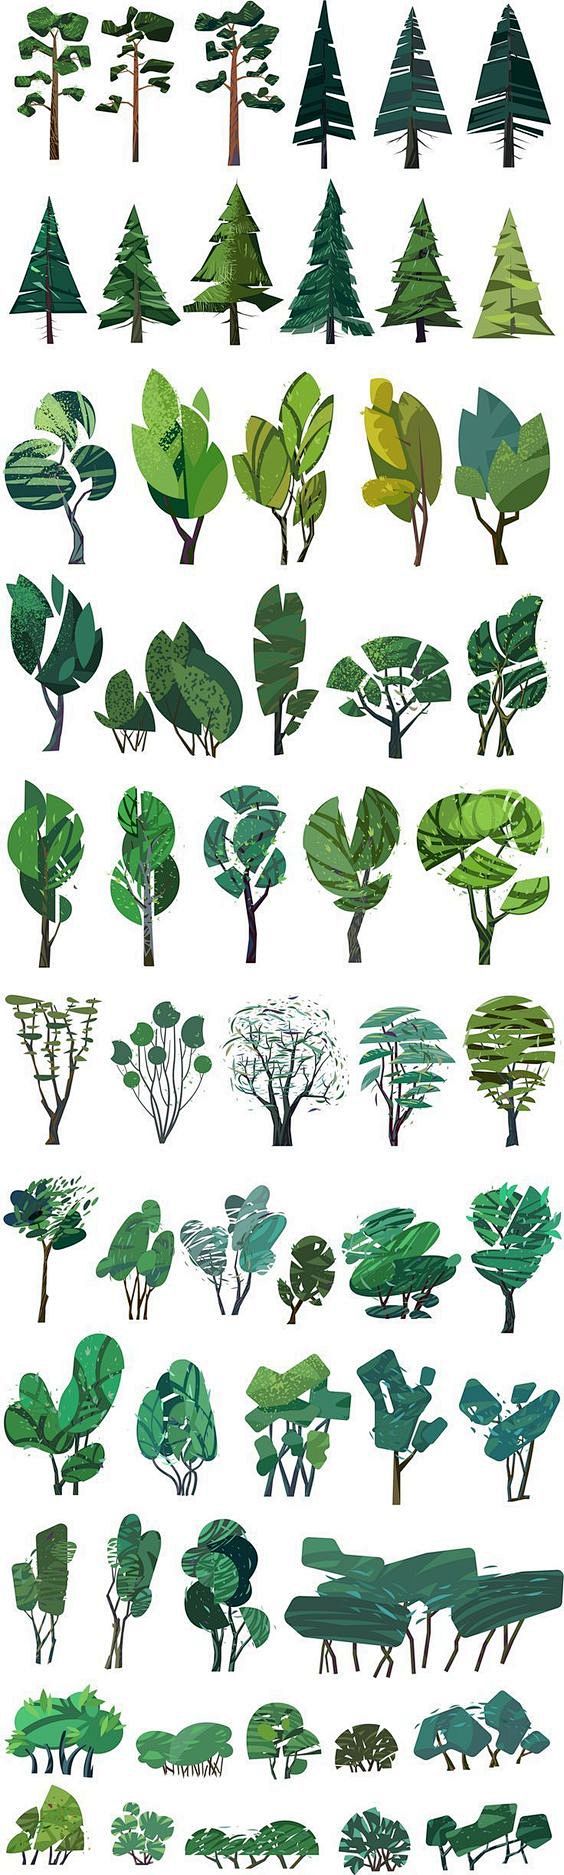 Pflanzen Illustratio...